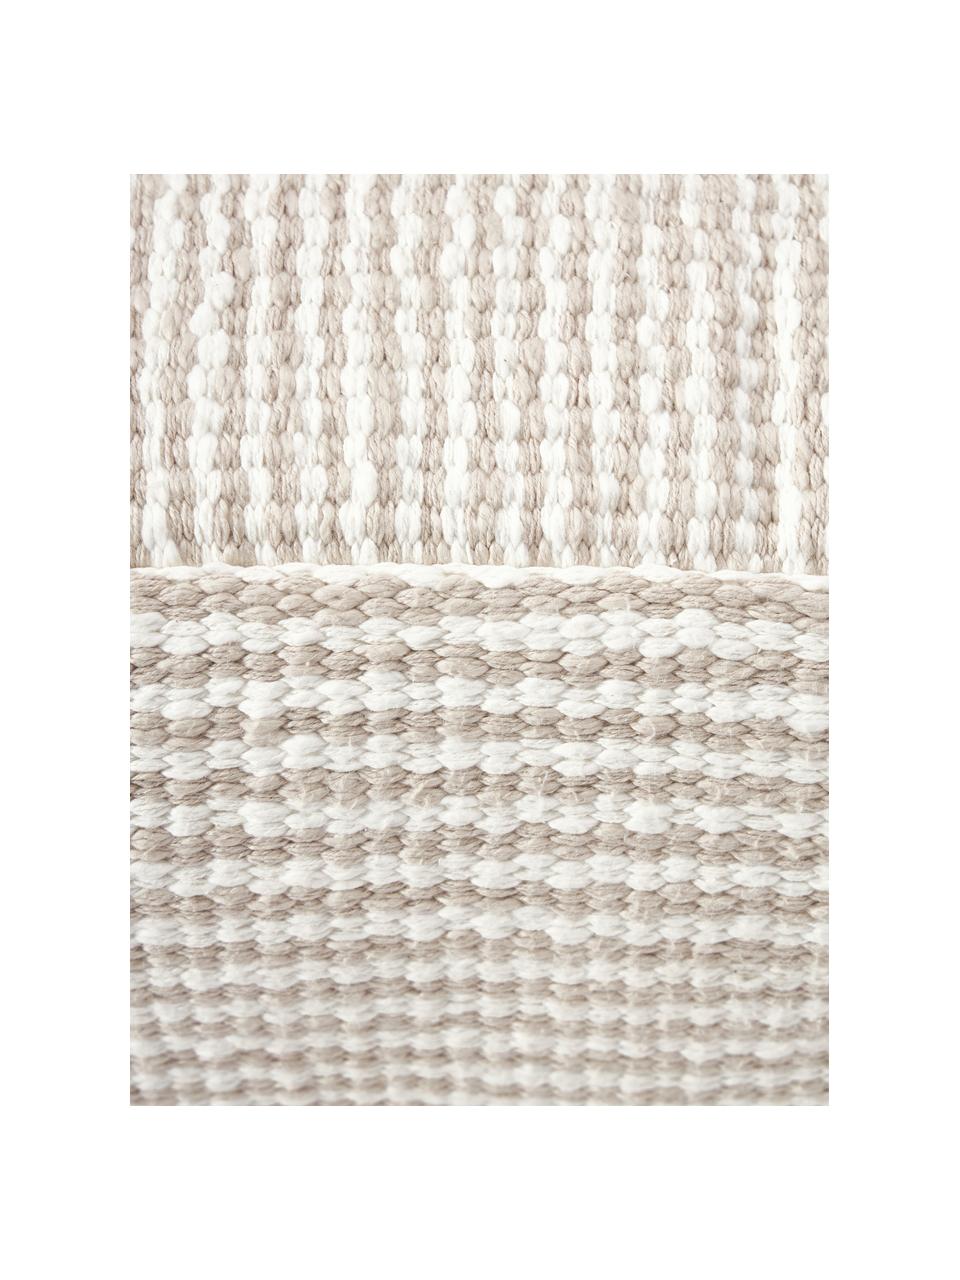 Cojín de suelo de algodón a rayas Carmelo, Funda: 100% algodón, Beige, blanco, An 60 x Al 20 cm